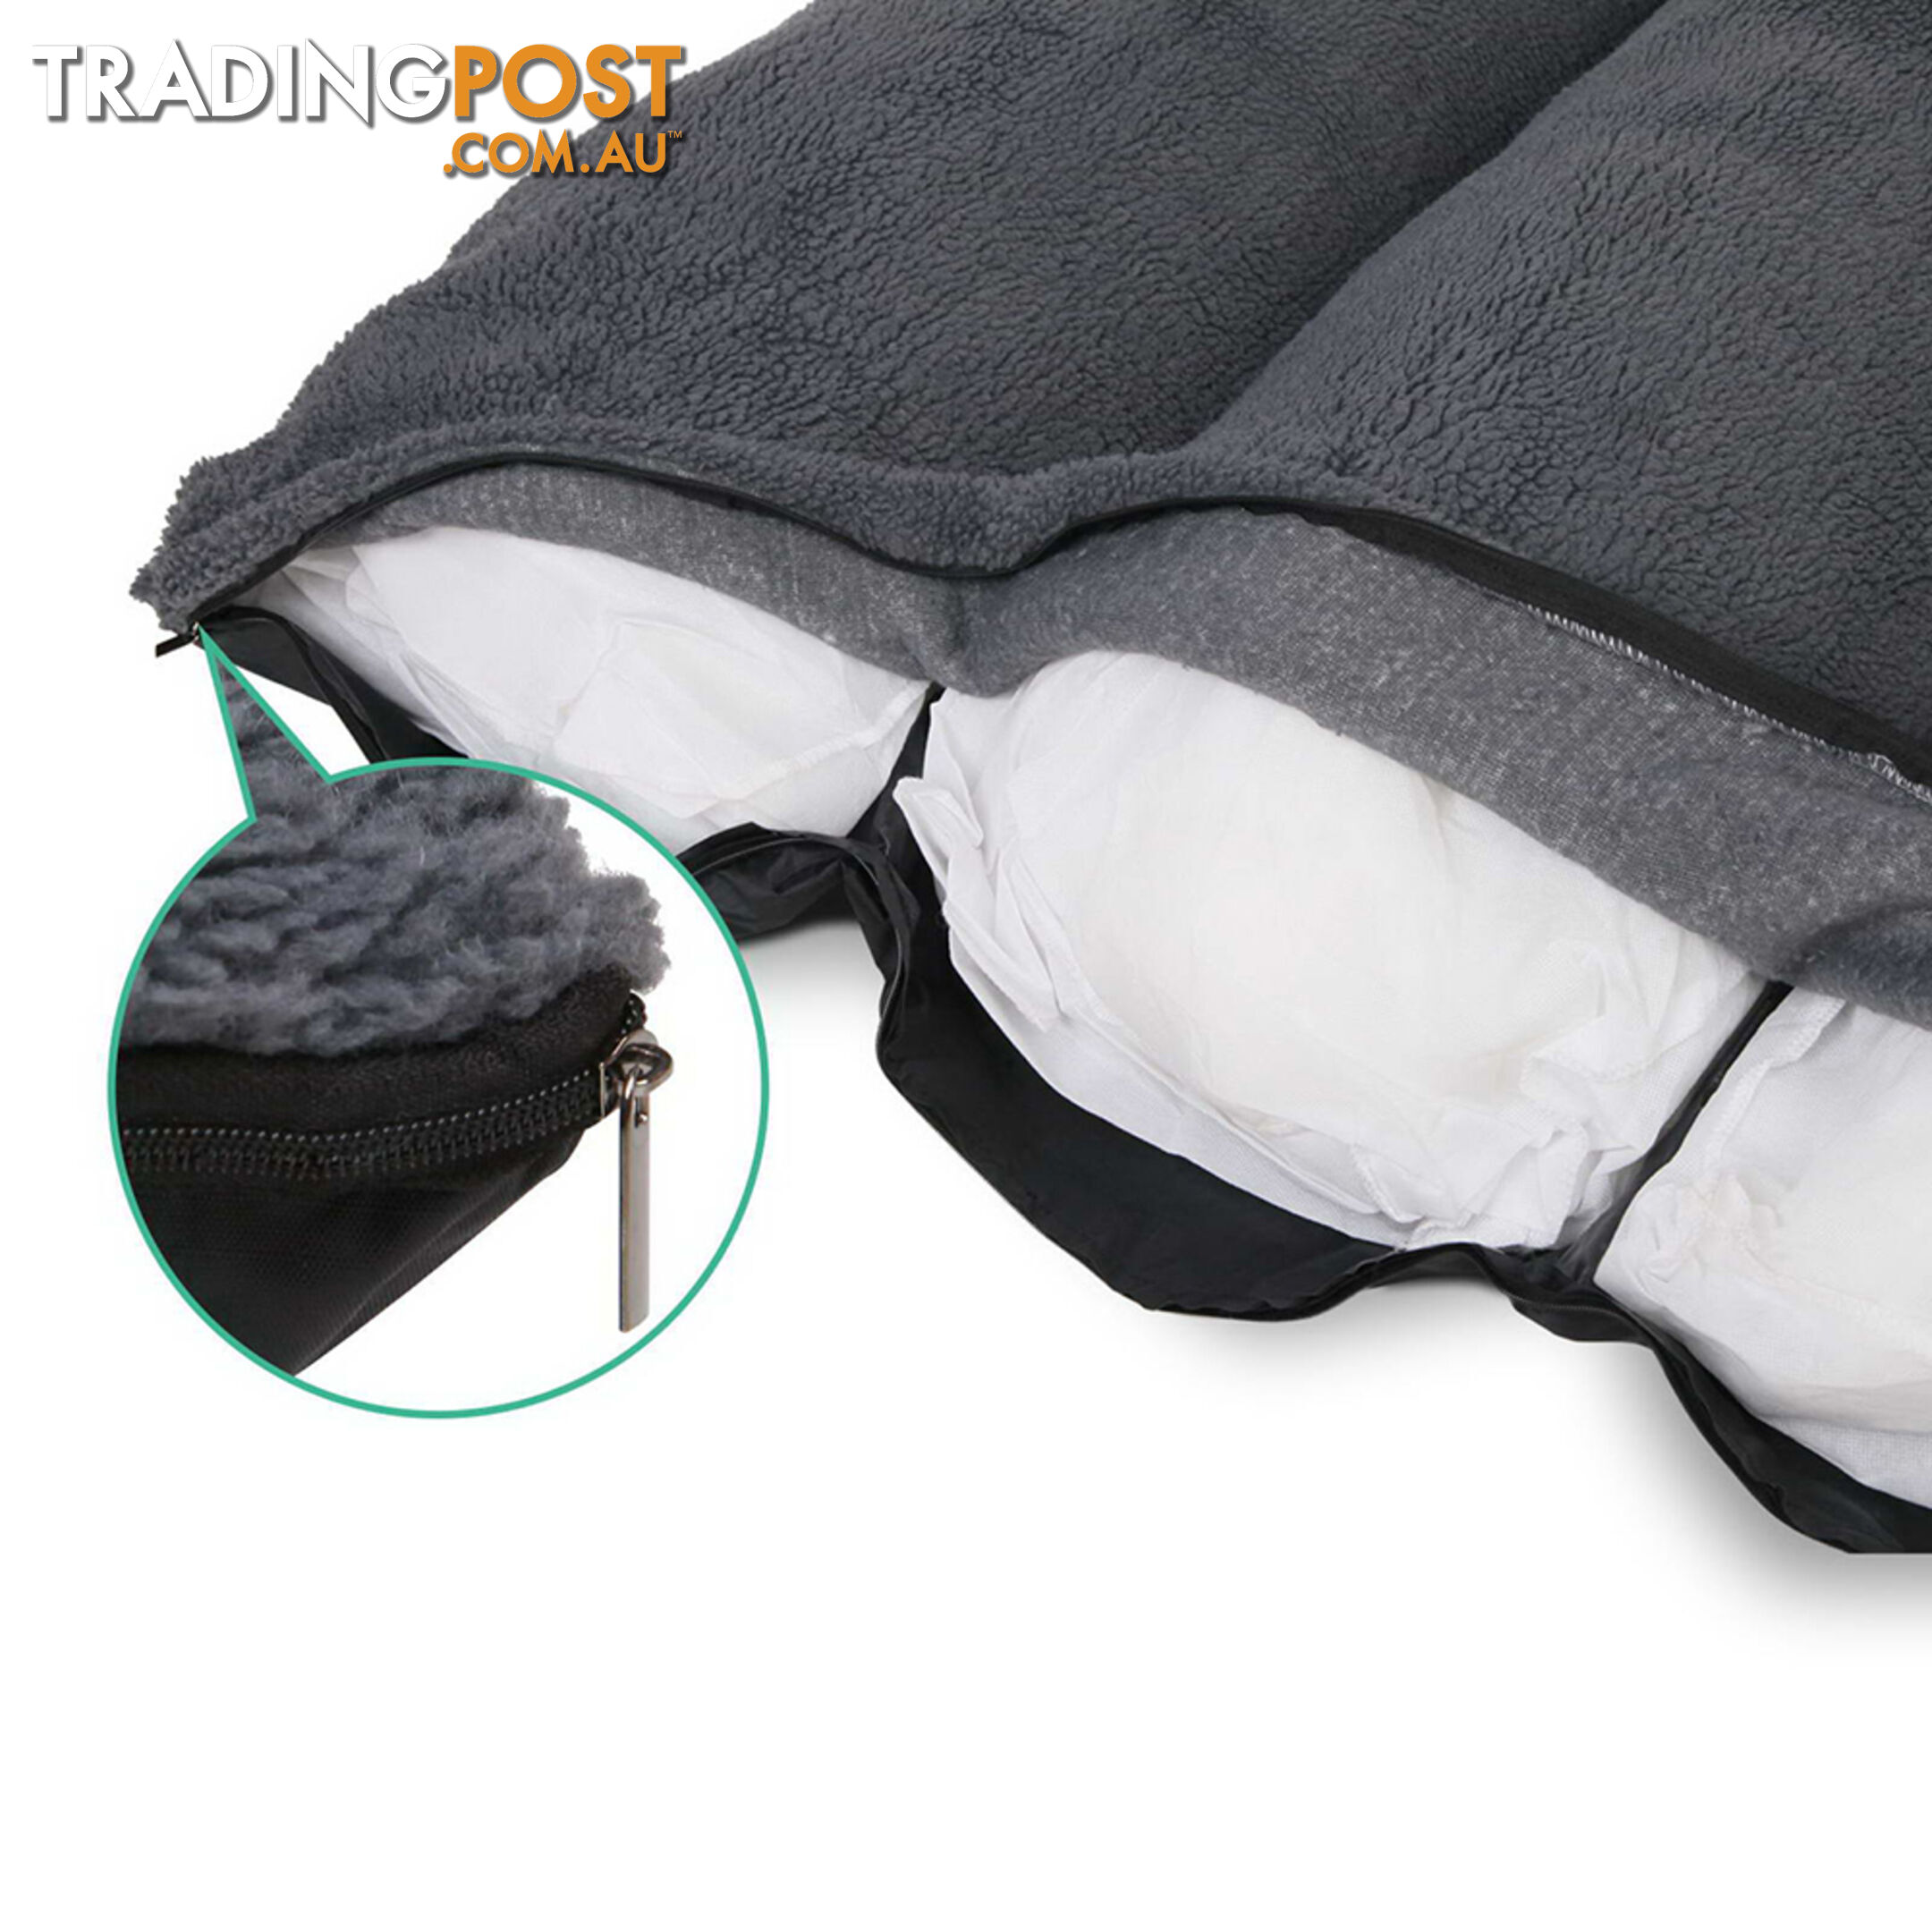 Waterproof Fleece Lined Dog Bed - Large